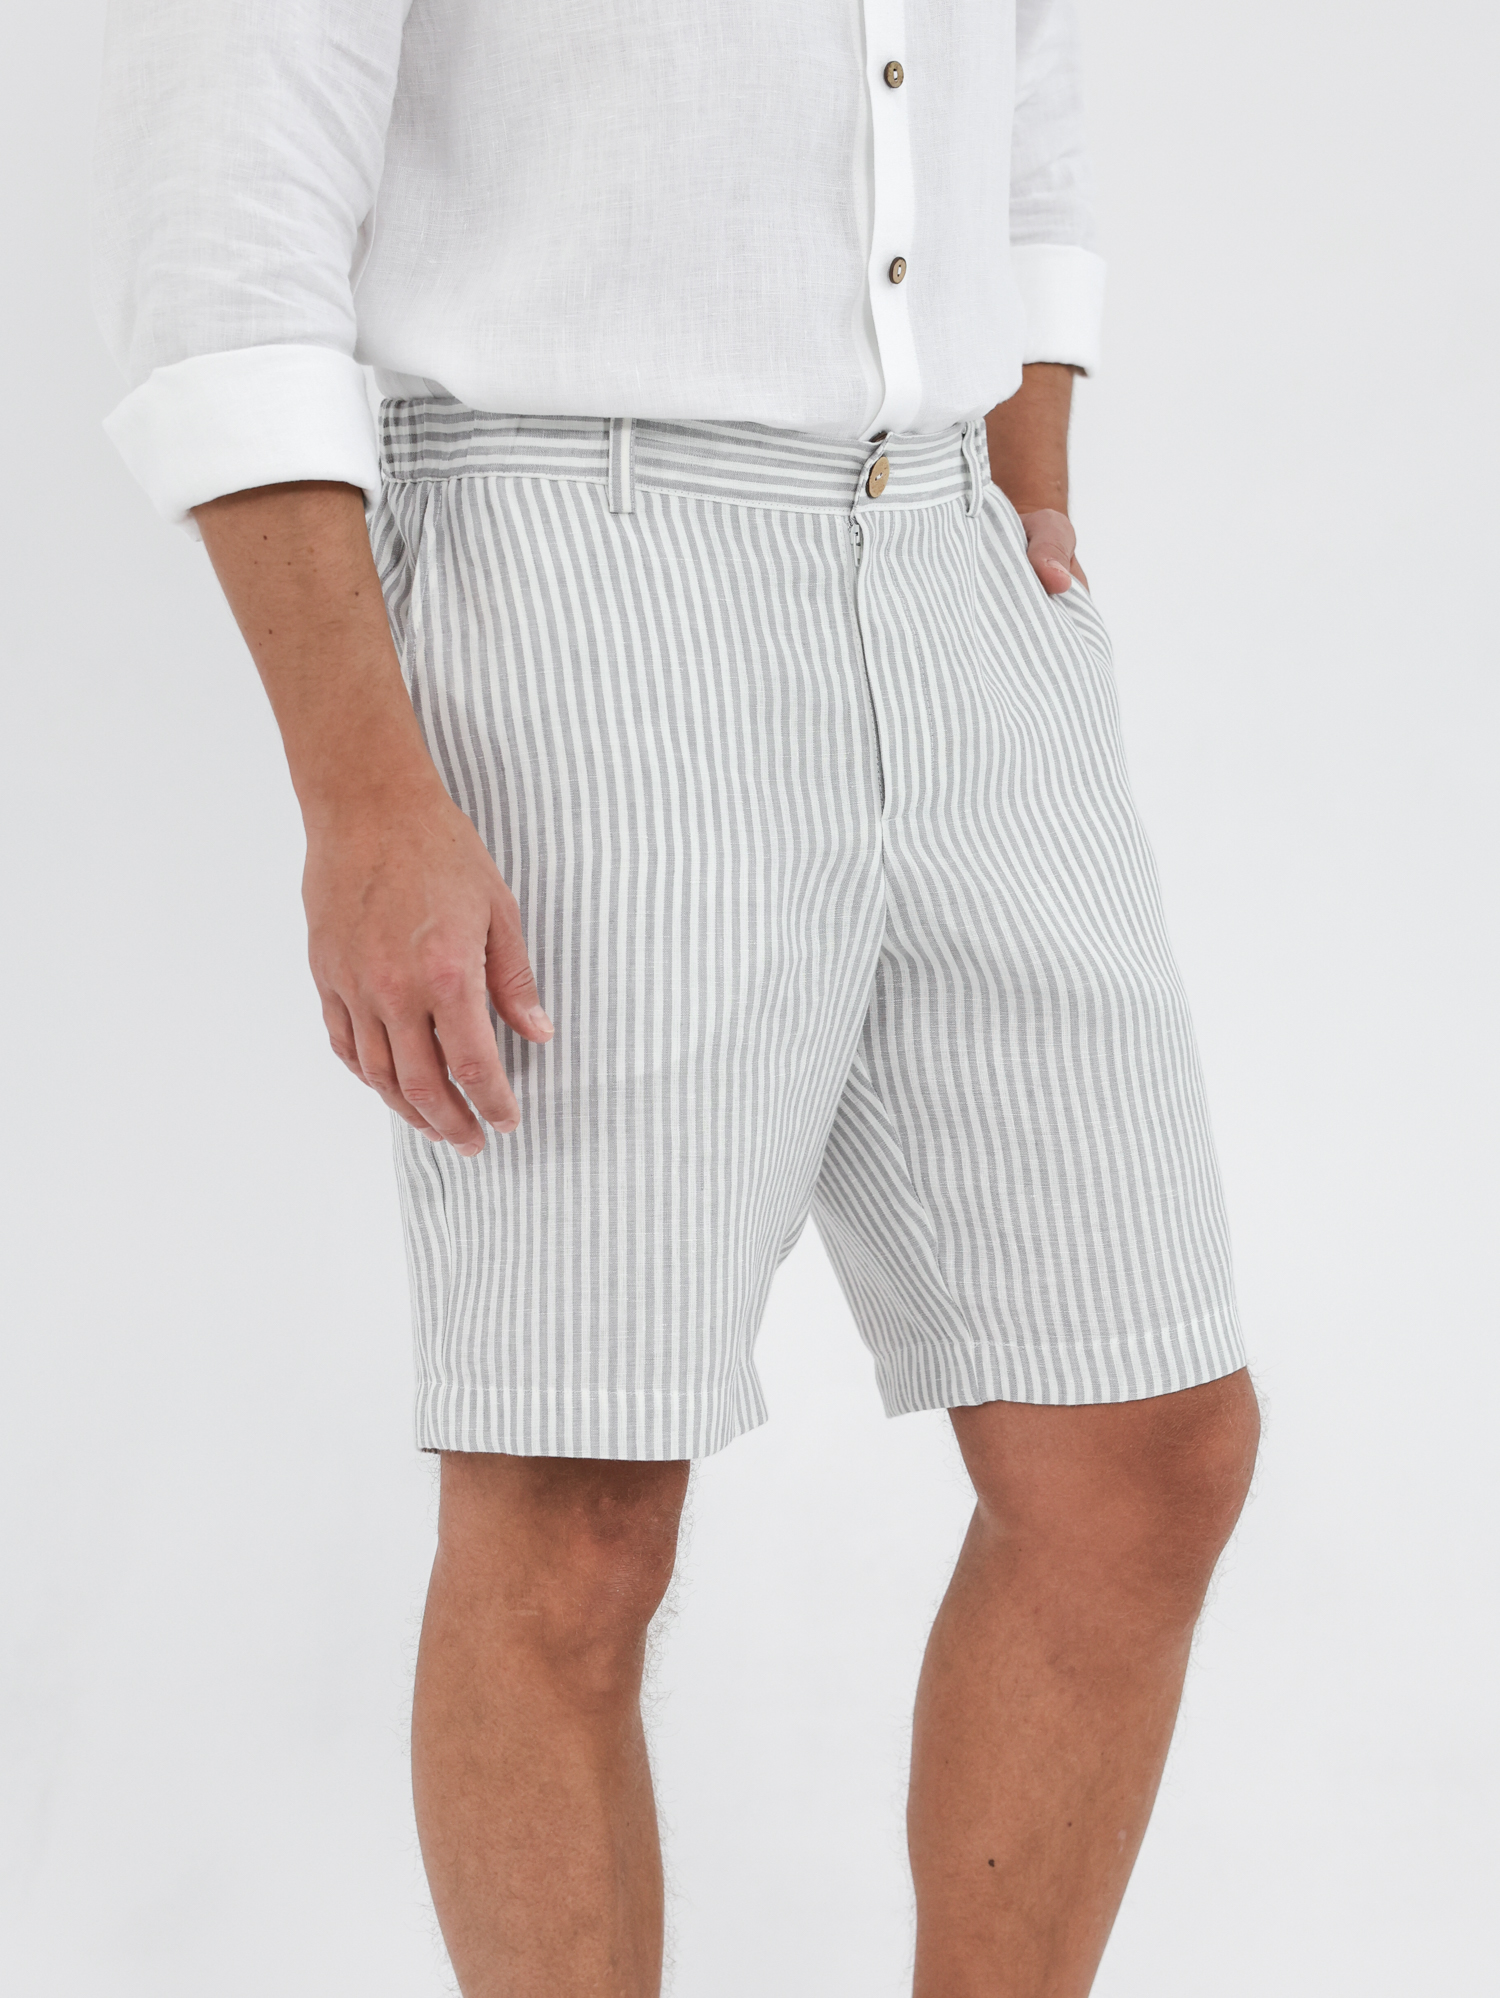 Men's striped linen shorts